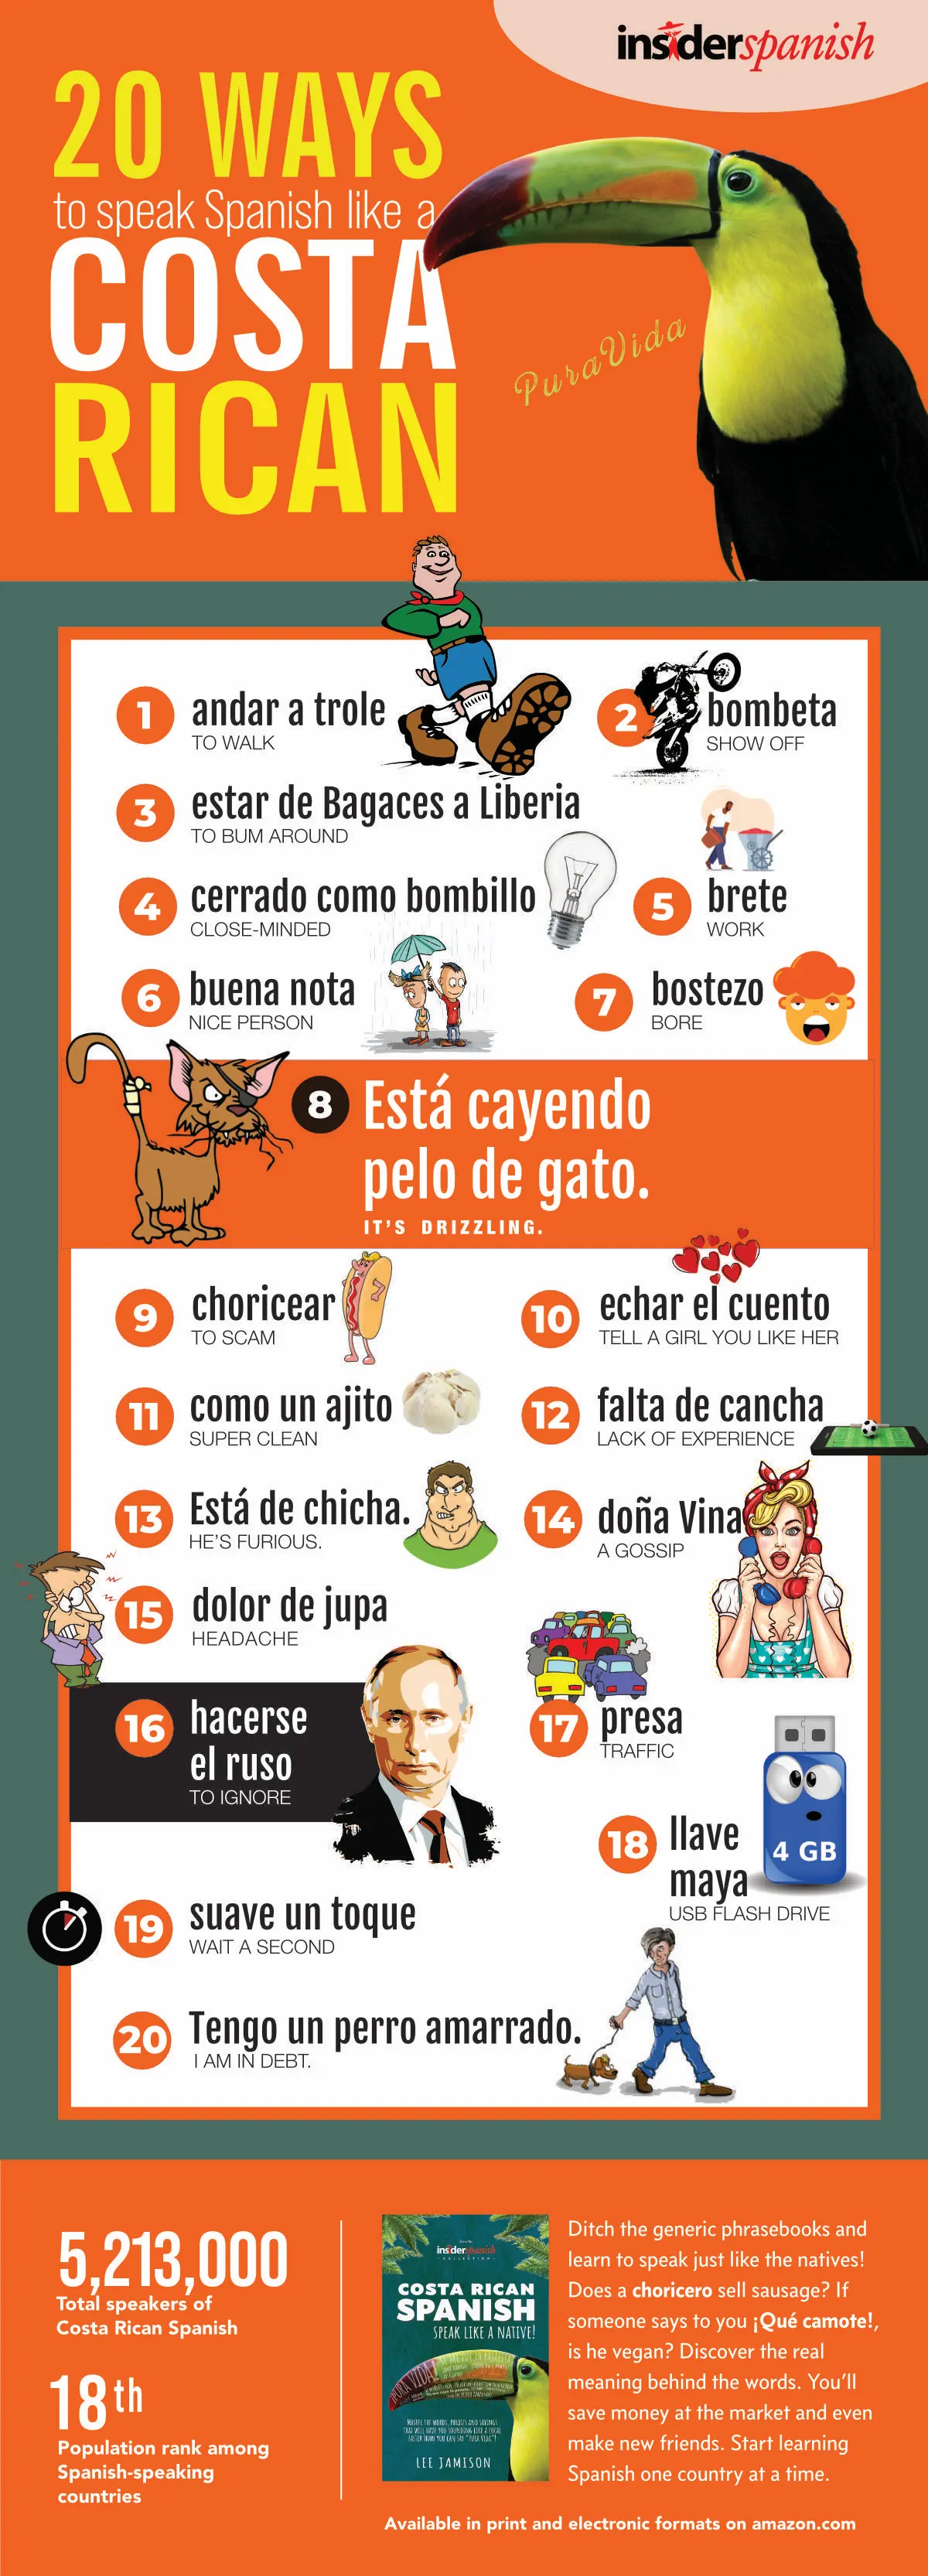 20 Ways to Speak Costa Rican Spanish